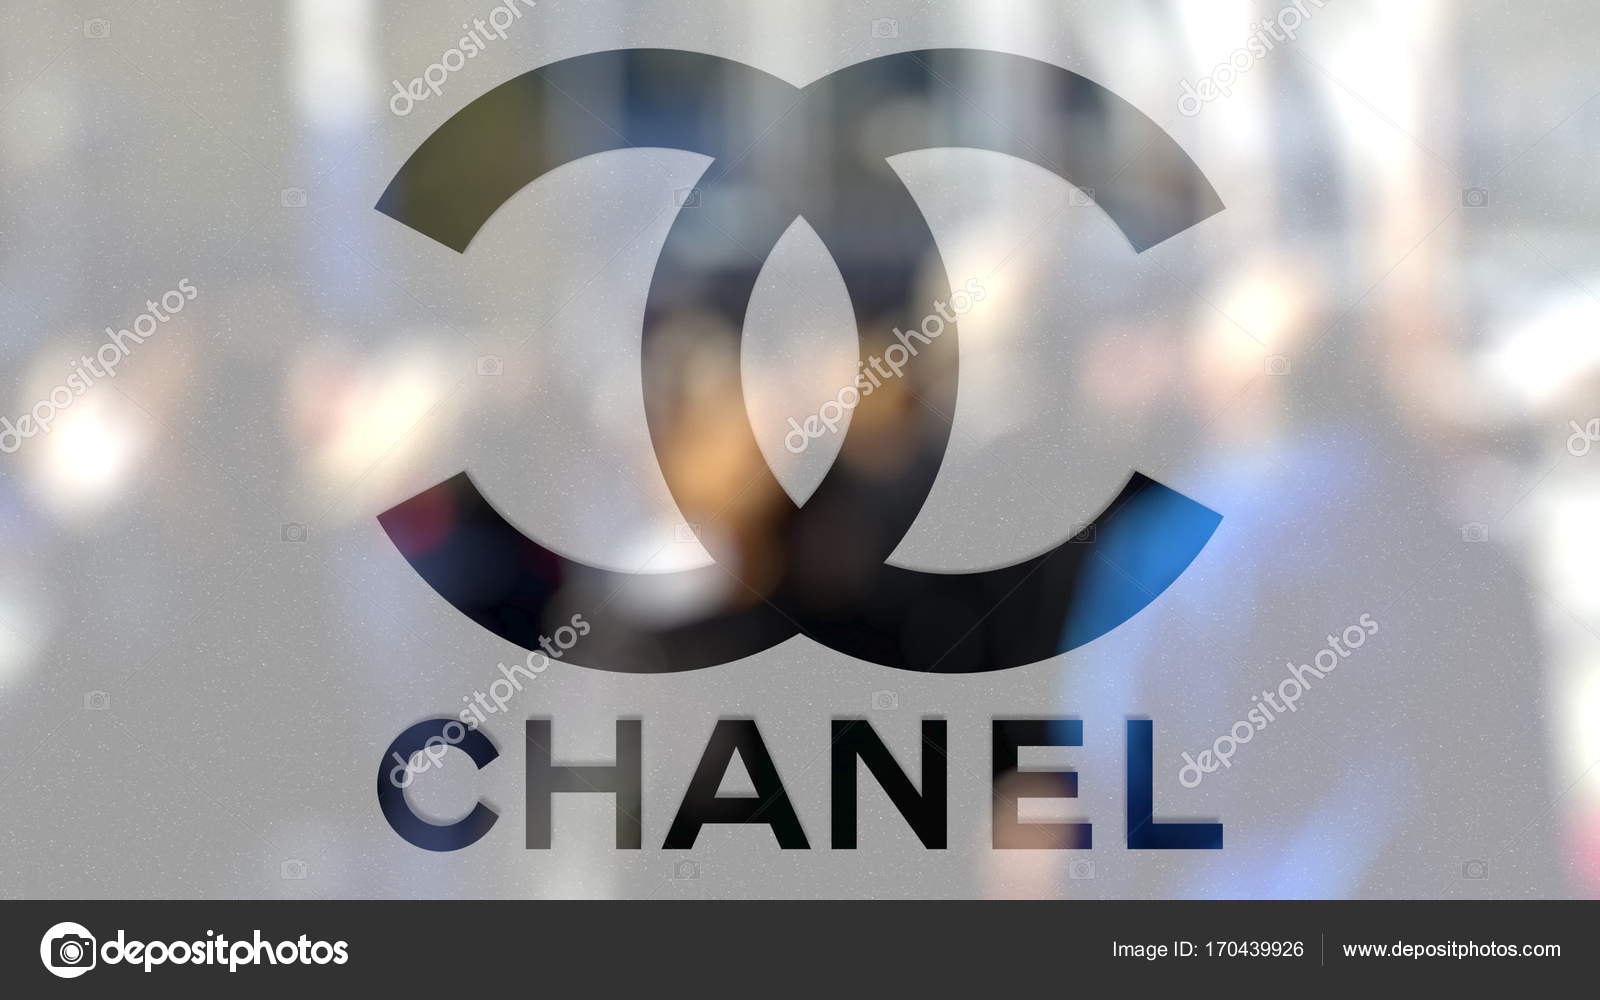 Chanel logo Stock Photos, Royalty Free Chanel logo Images 